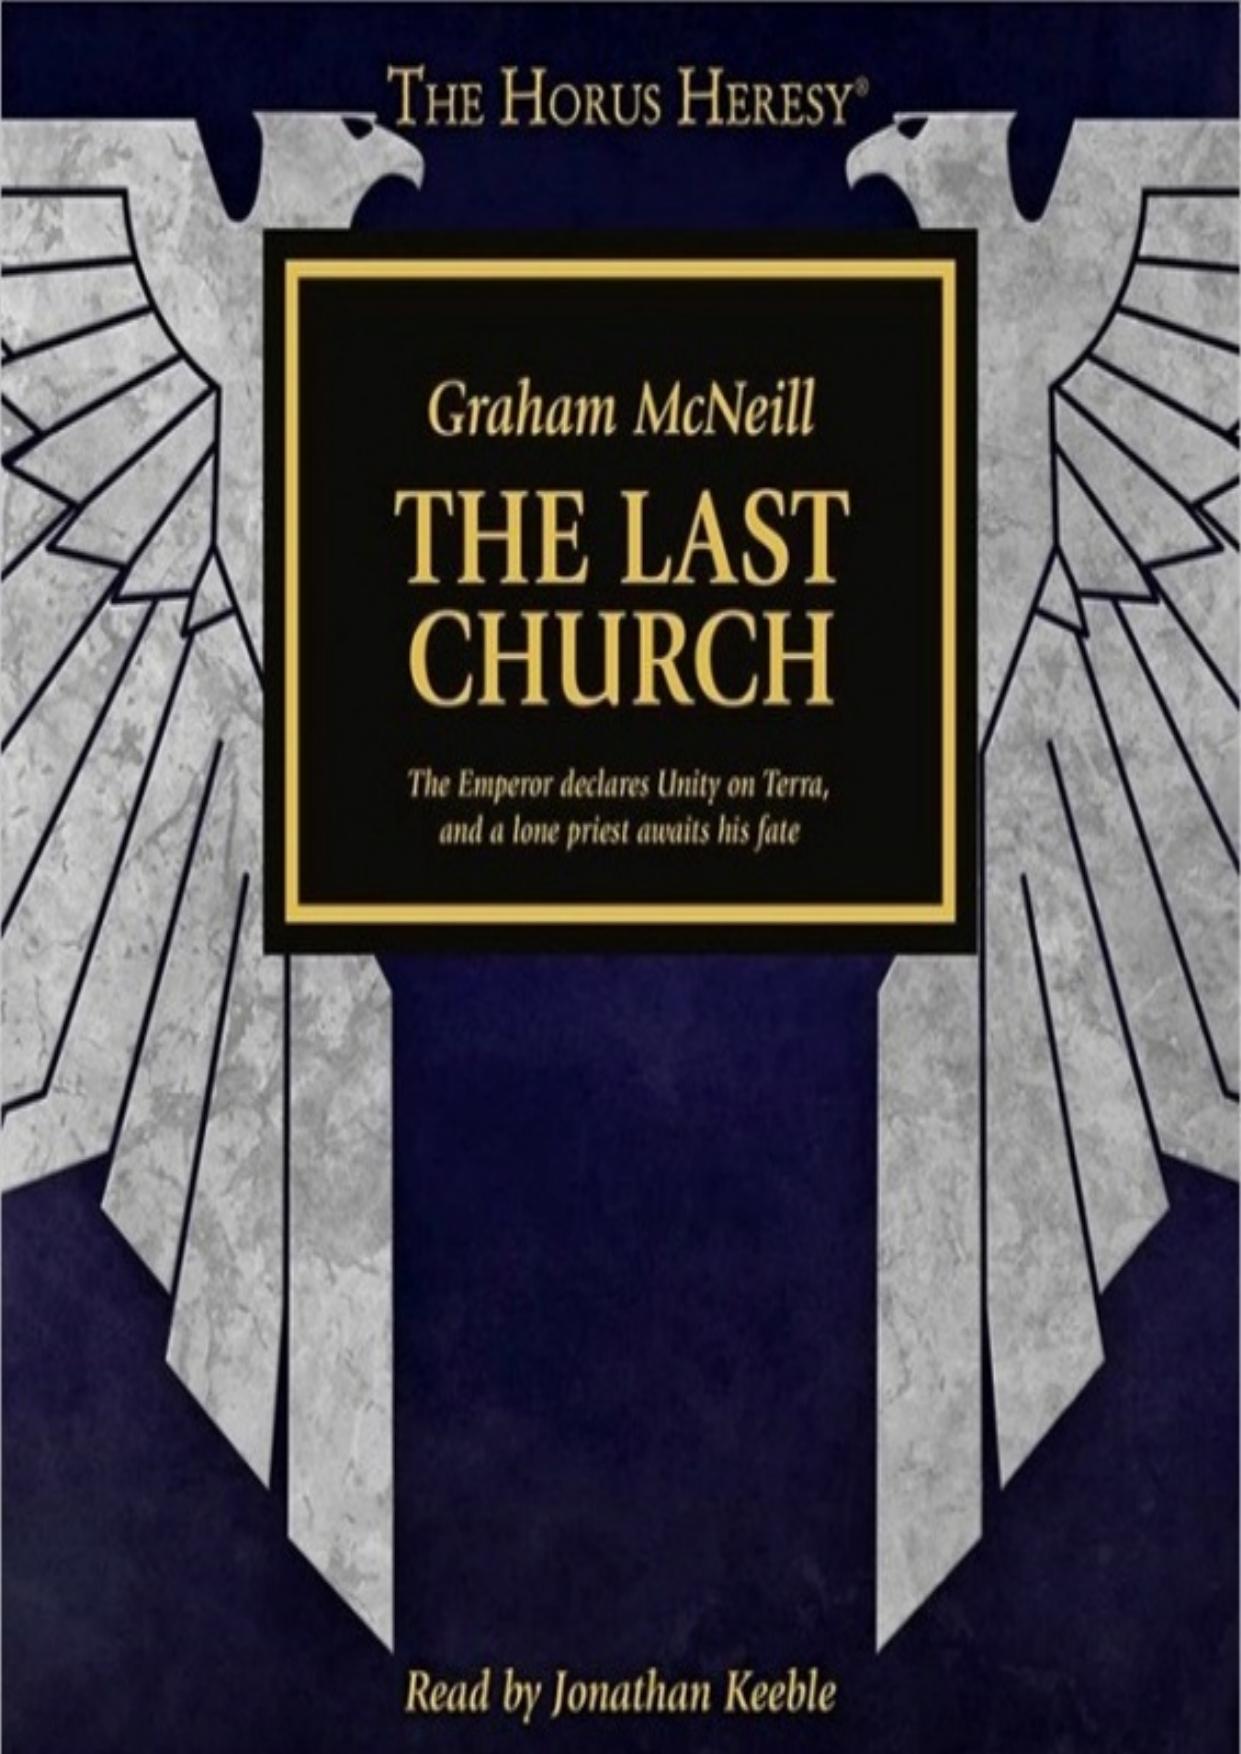 THE LAST CHURCH by The Last Church (Graham McNeill)